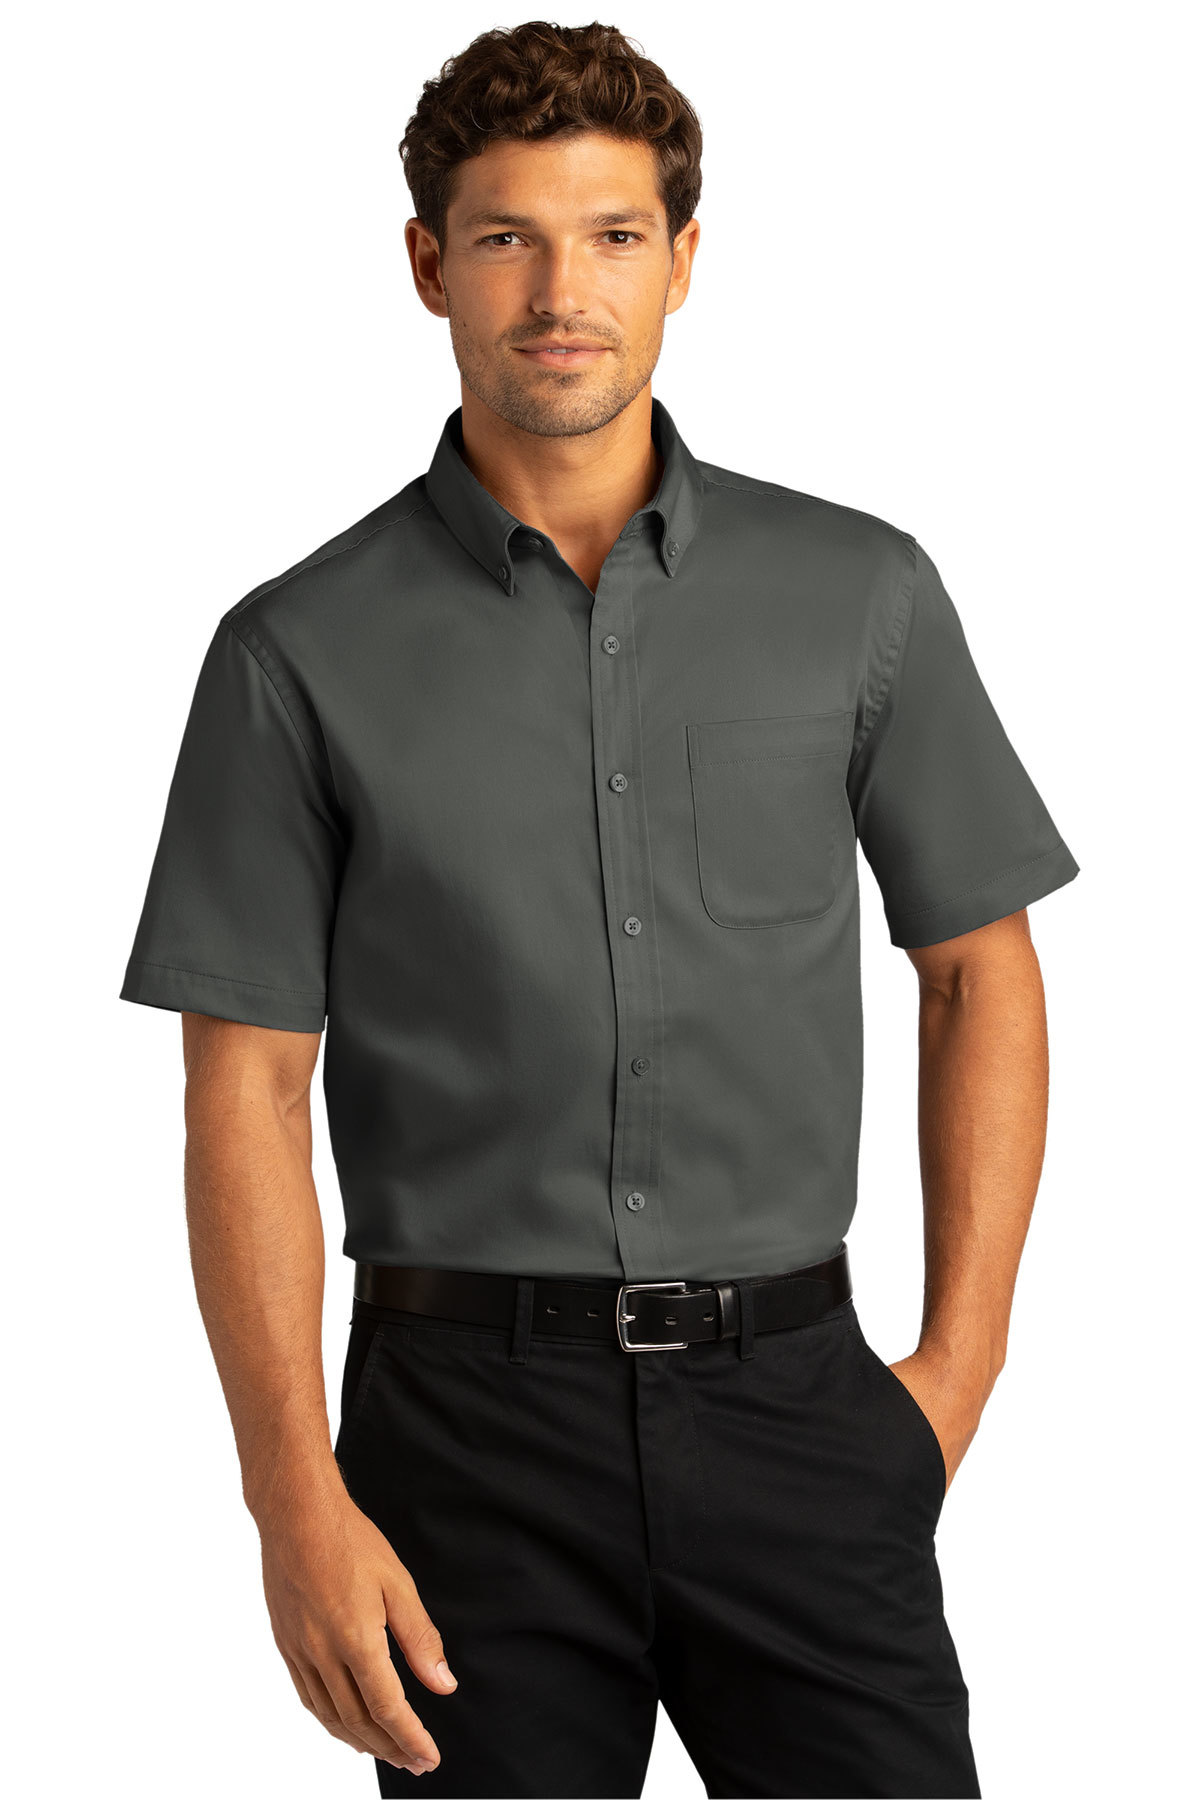 Port Authority Short Sleeve SuperPro ReactTwill Shirt | Product | SanMar